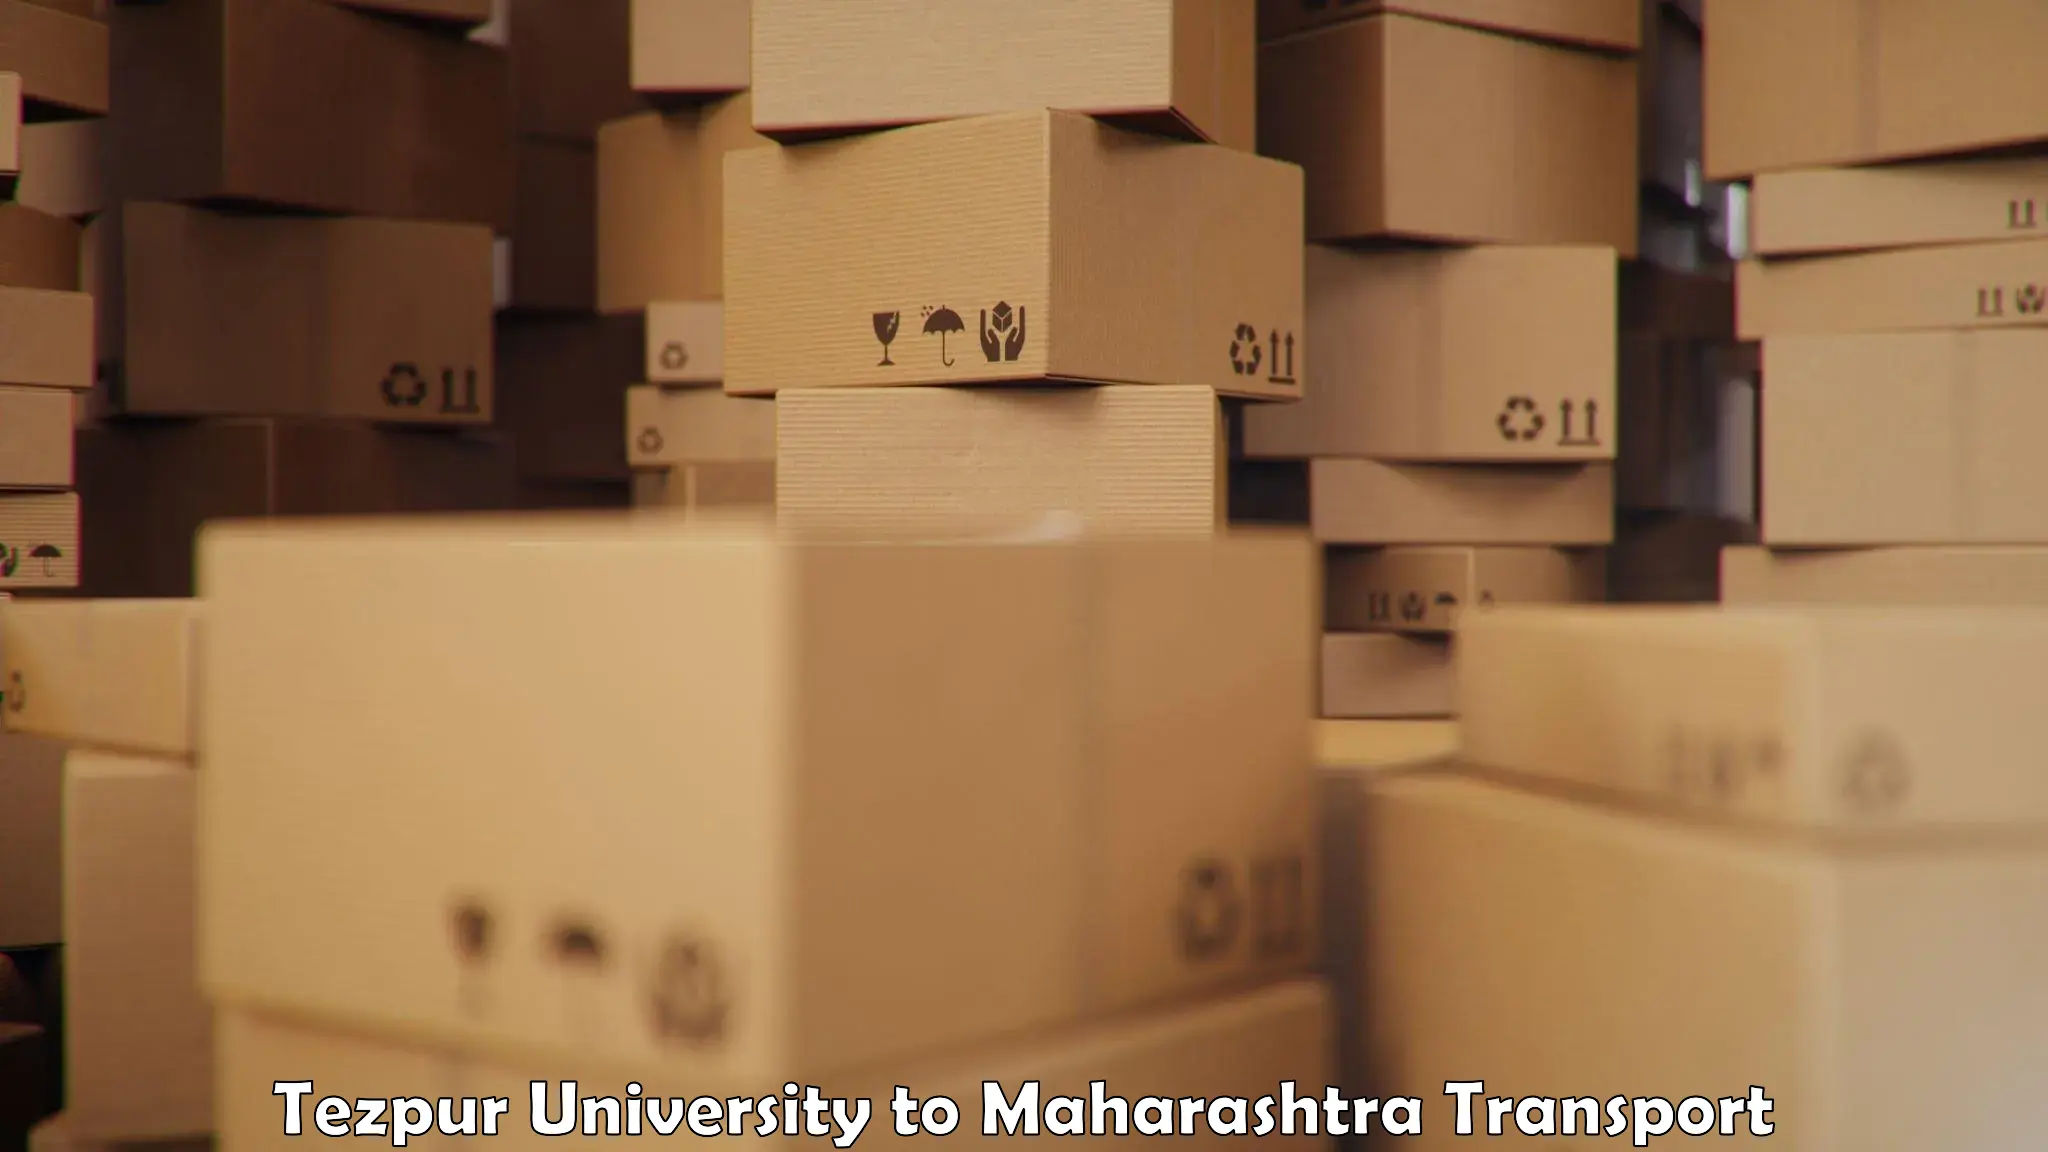 Furniture transport service Tezpur University to Ahmednagar